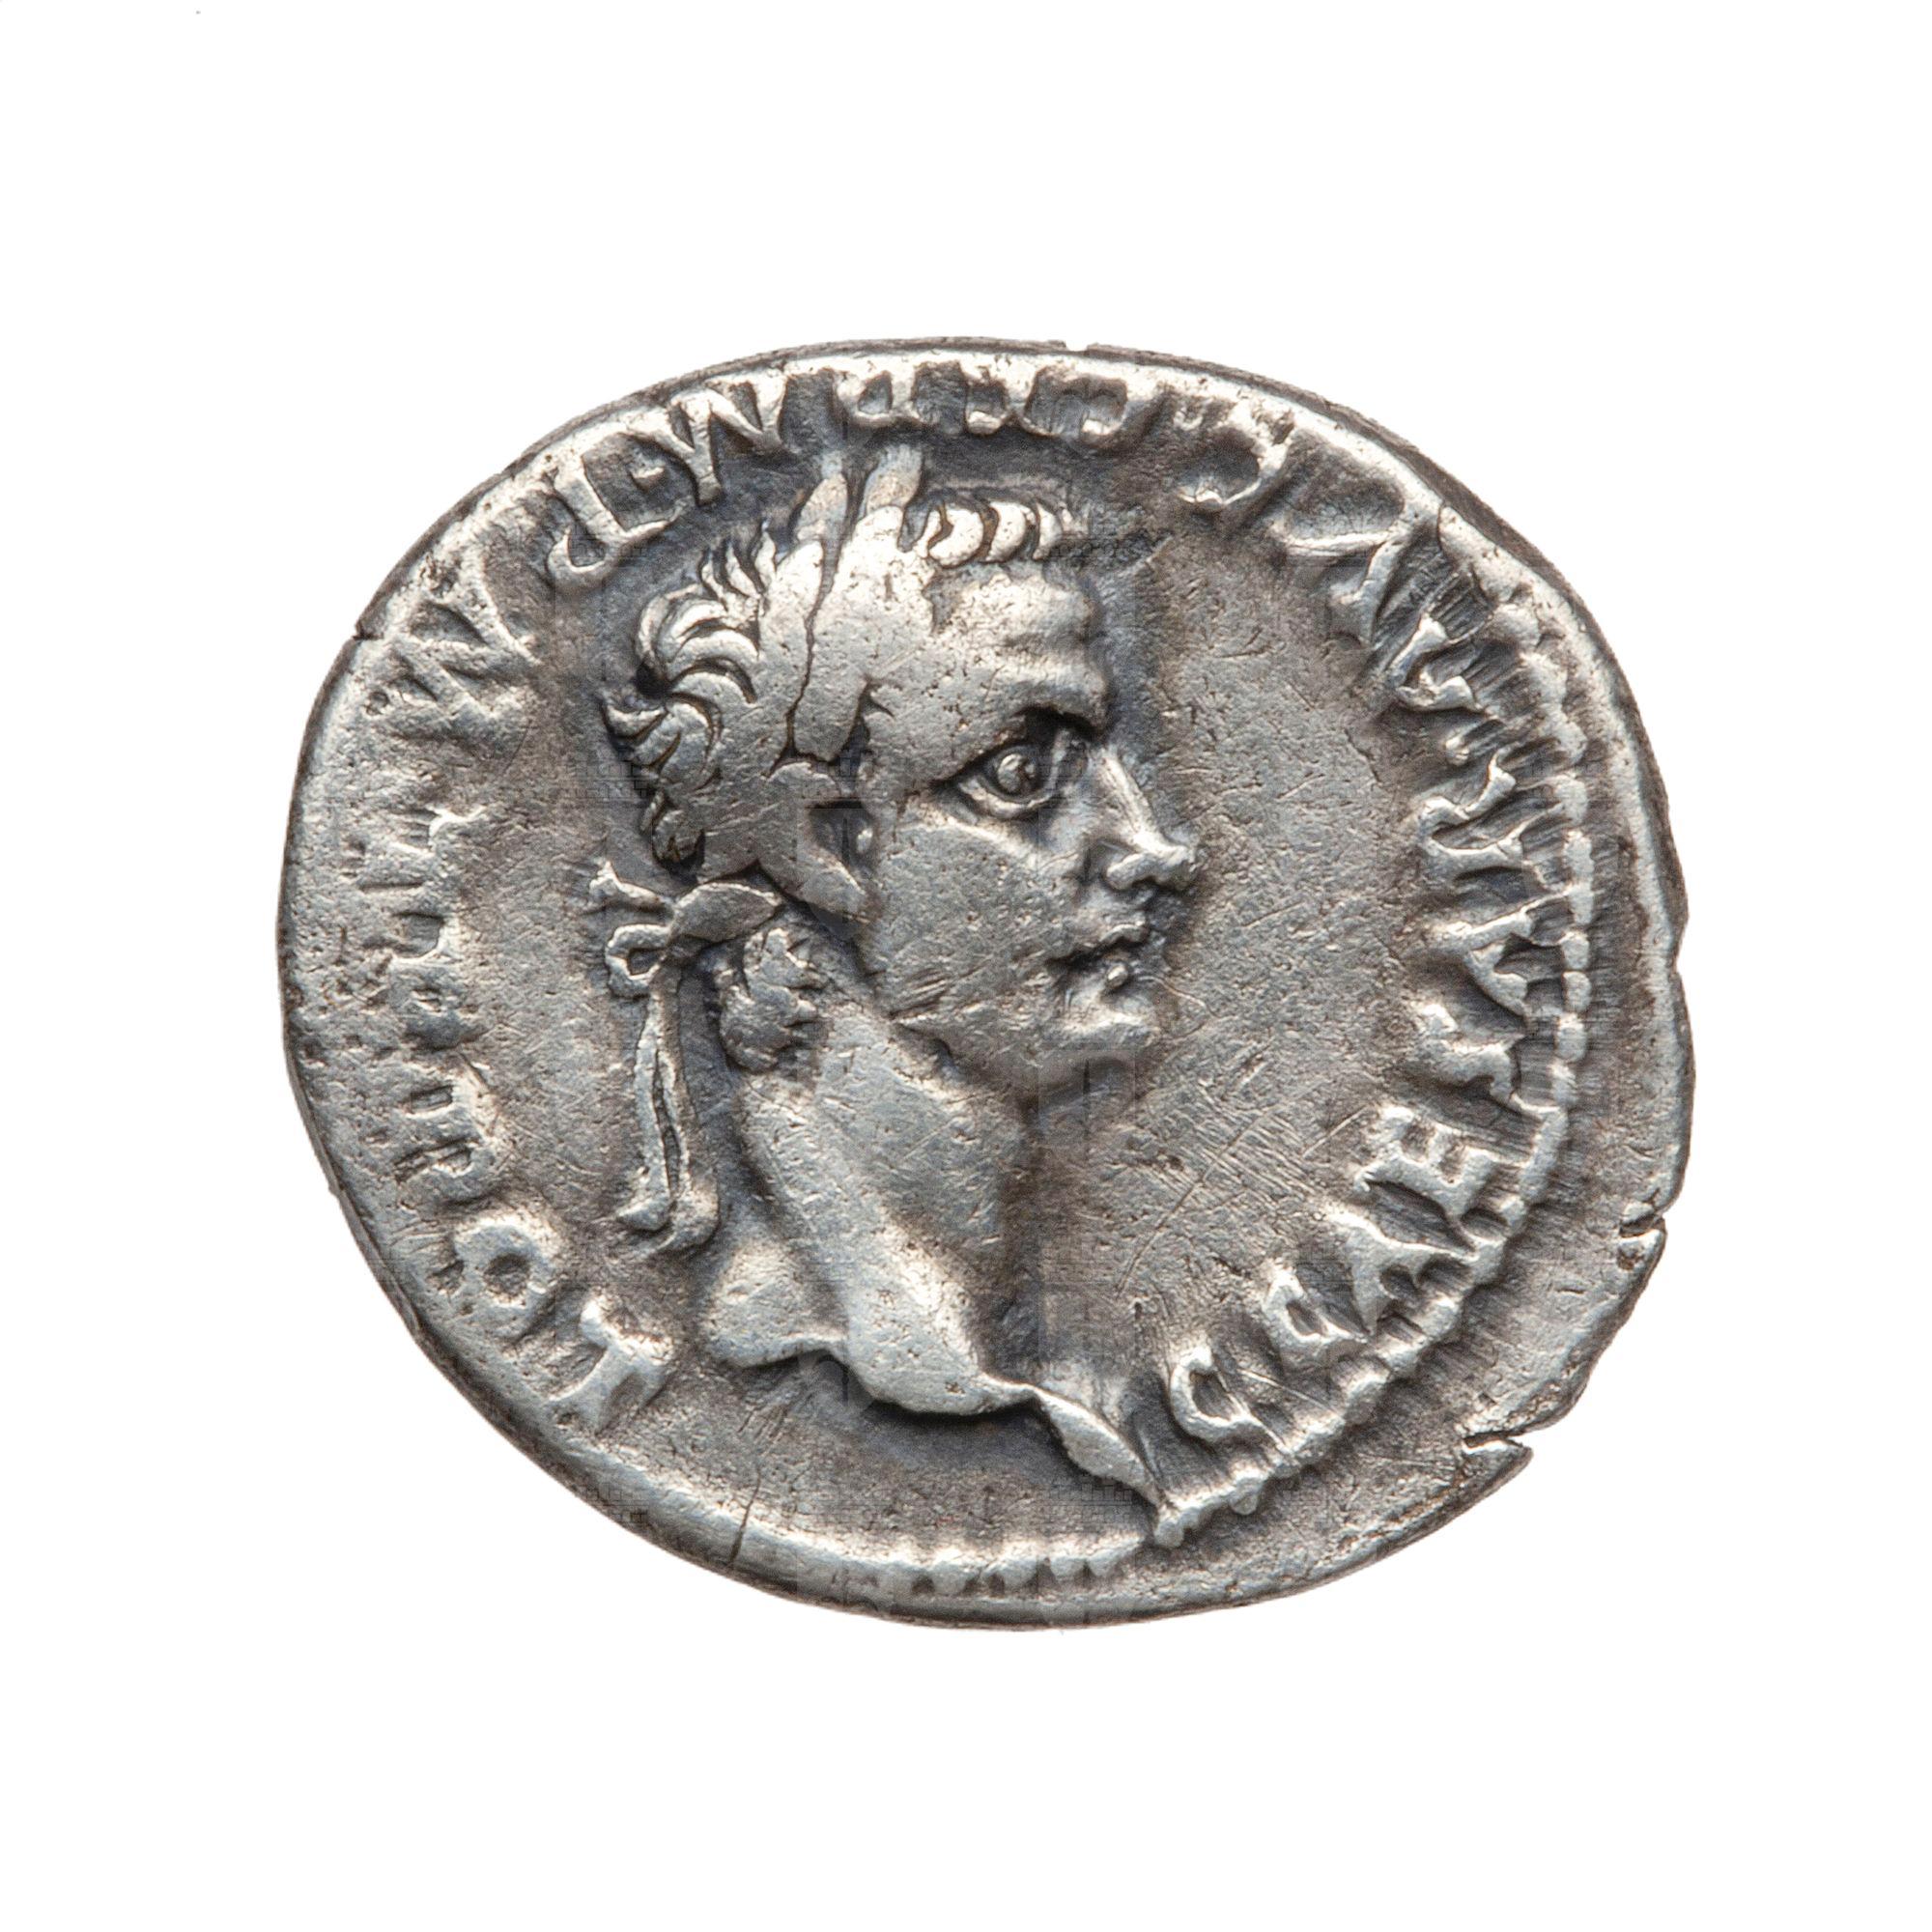 https://catalogomusei.comune.trieste.it/samira/resource/image/reperti-archeologici/Roma 86 D Caligola.jpg?token=65698d433b3db